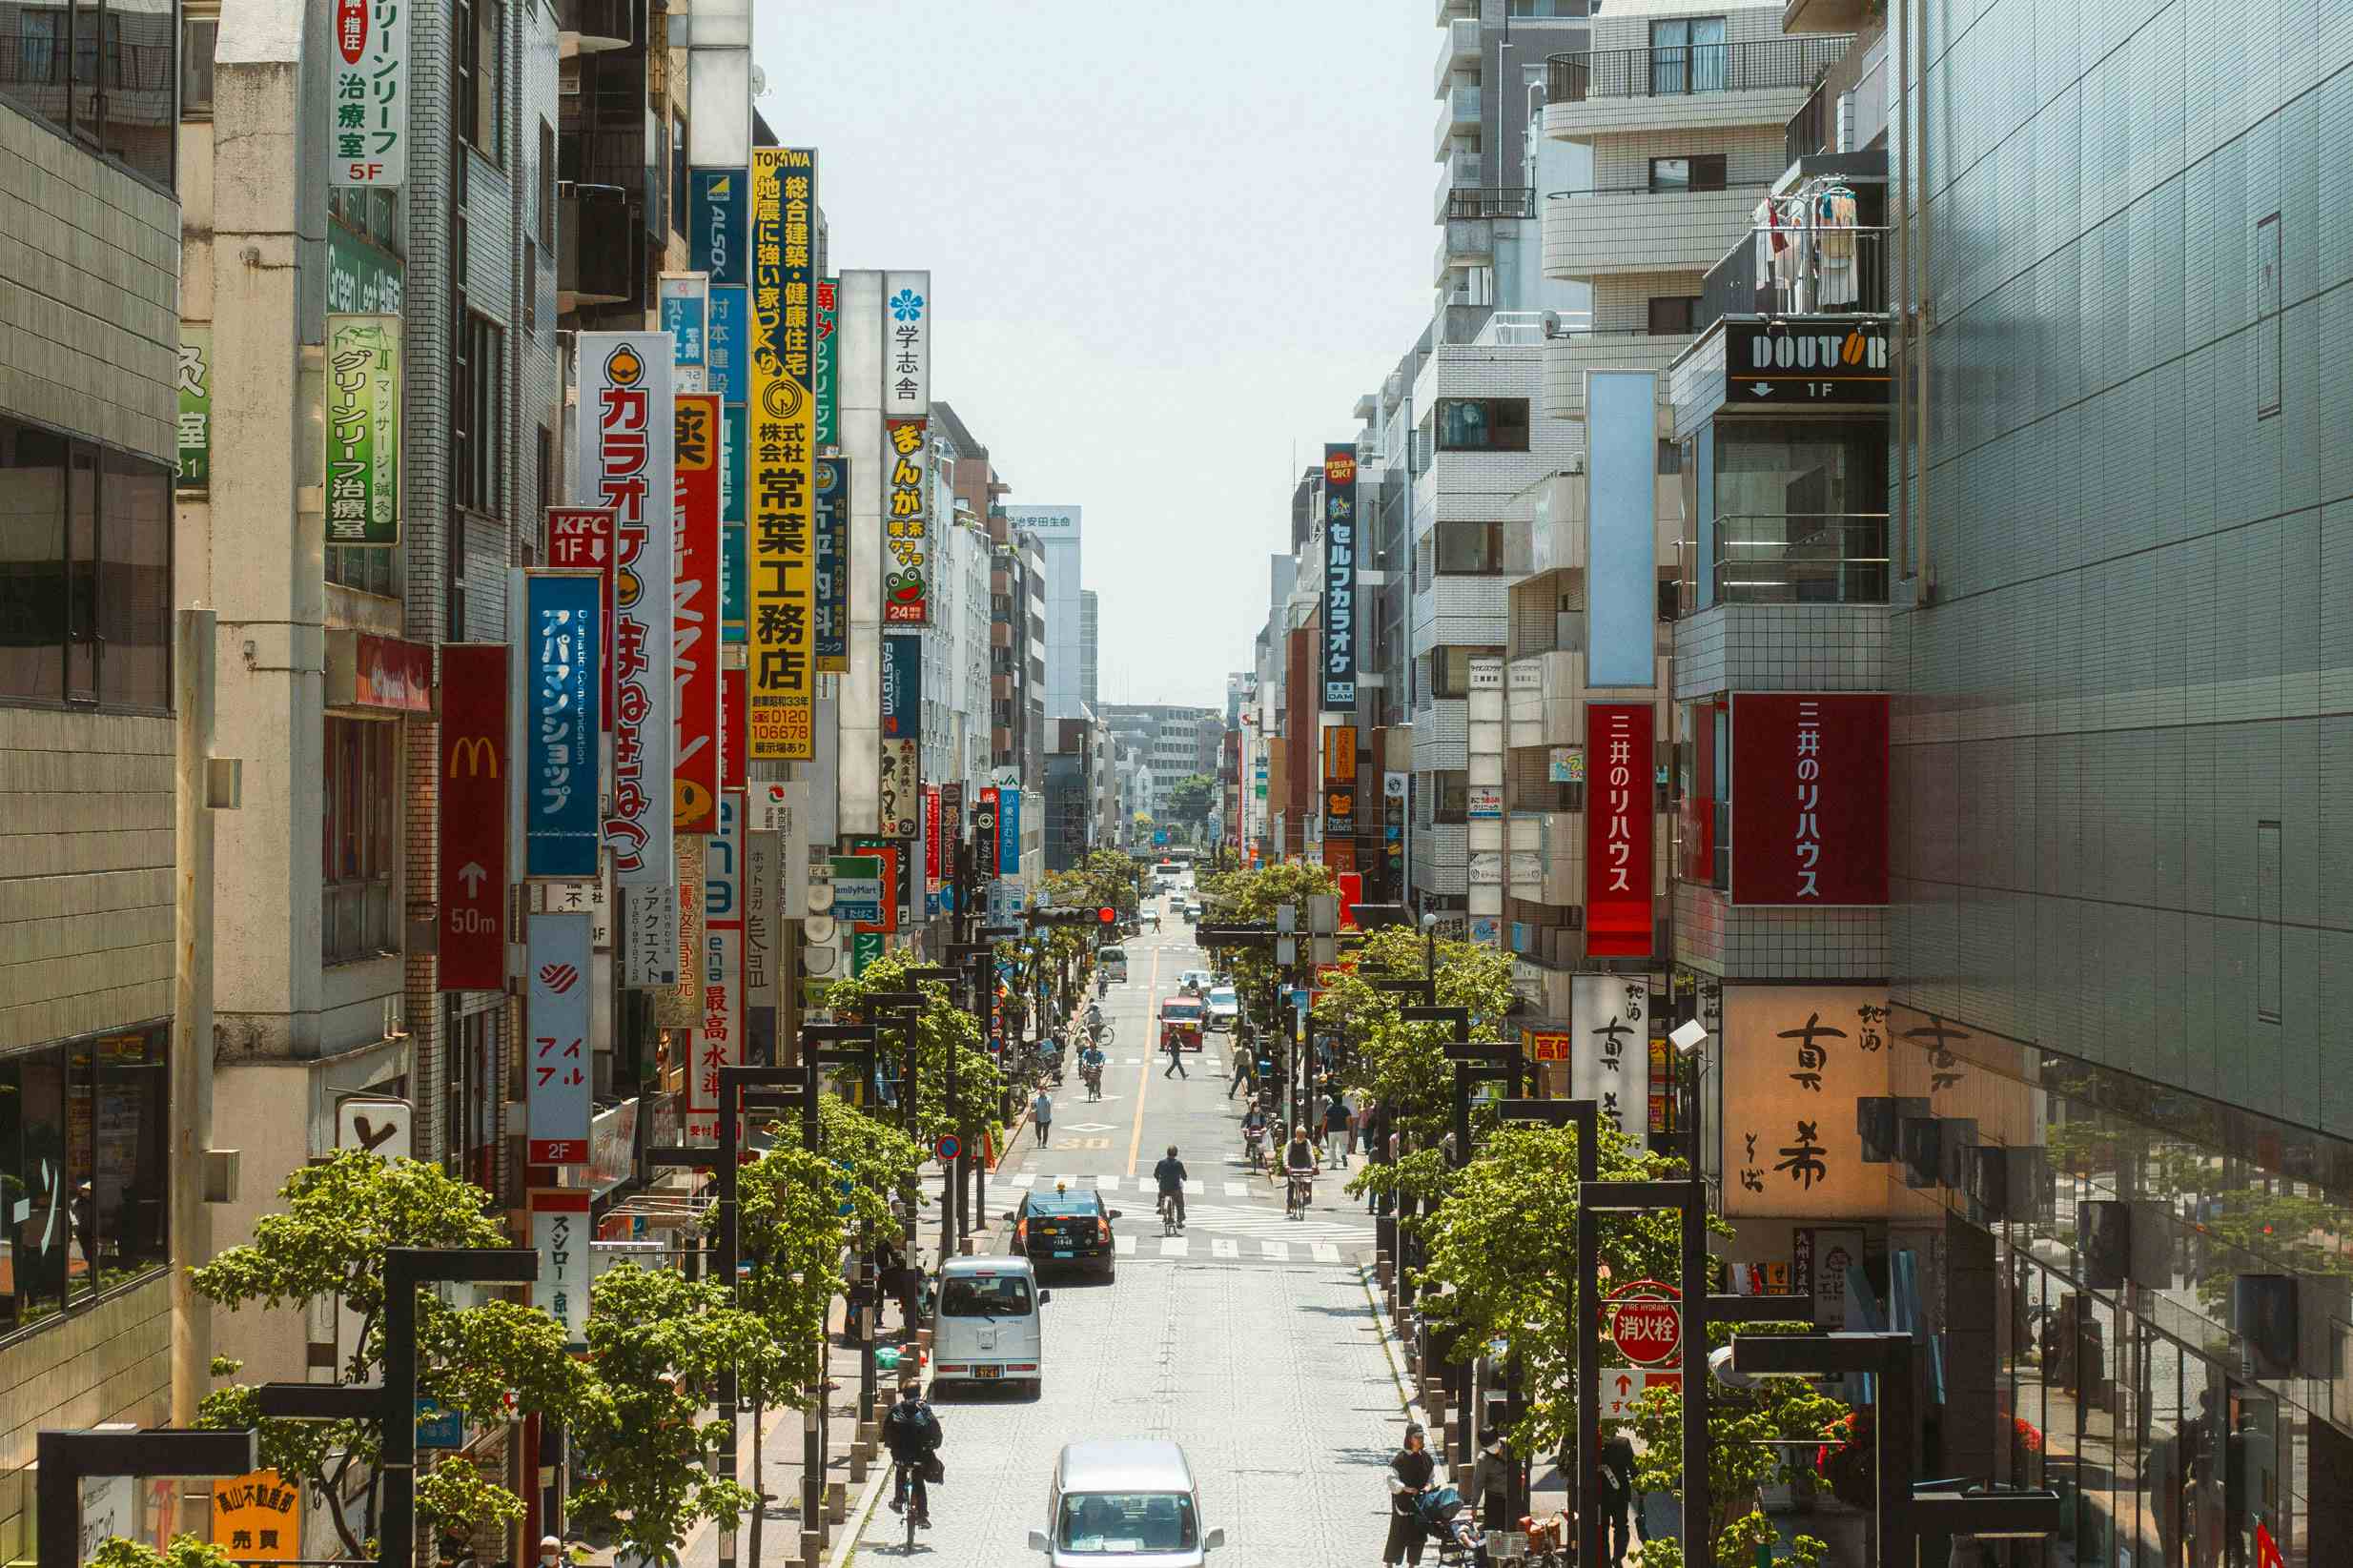 A Busy Street in Mikata, Tokyo